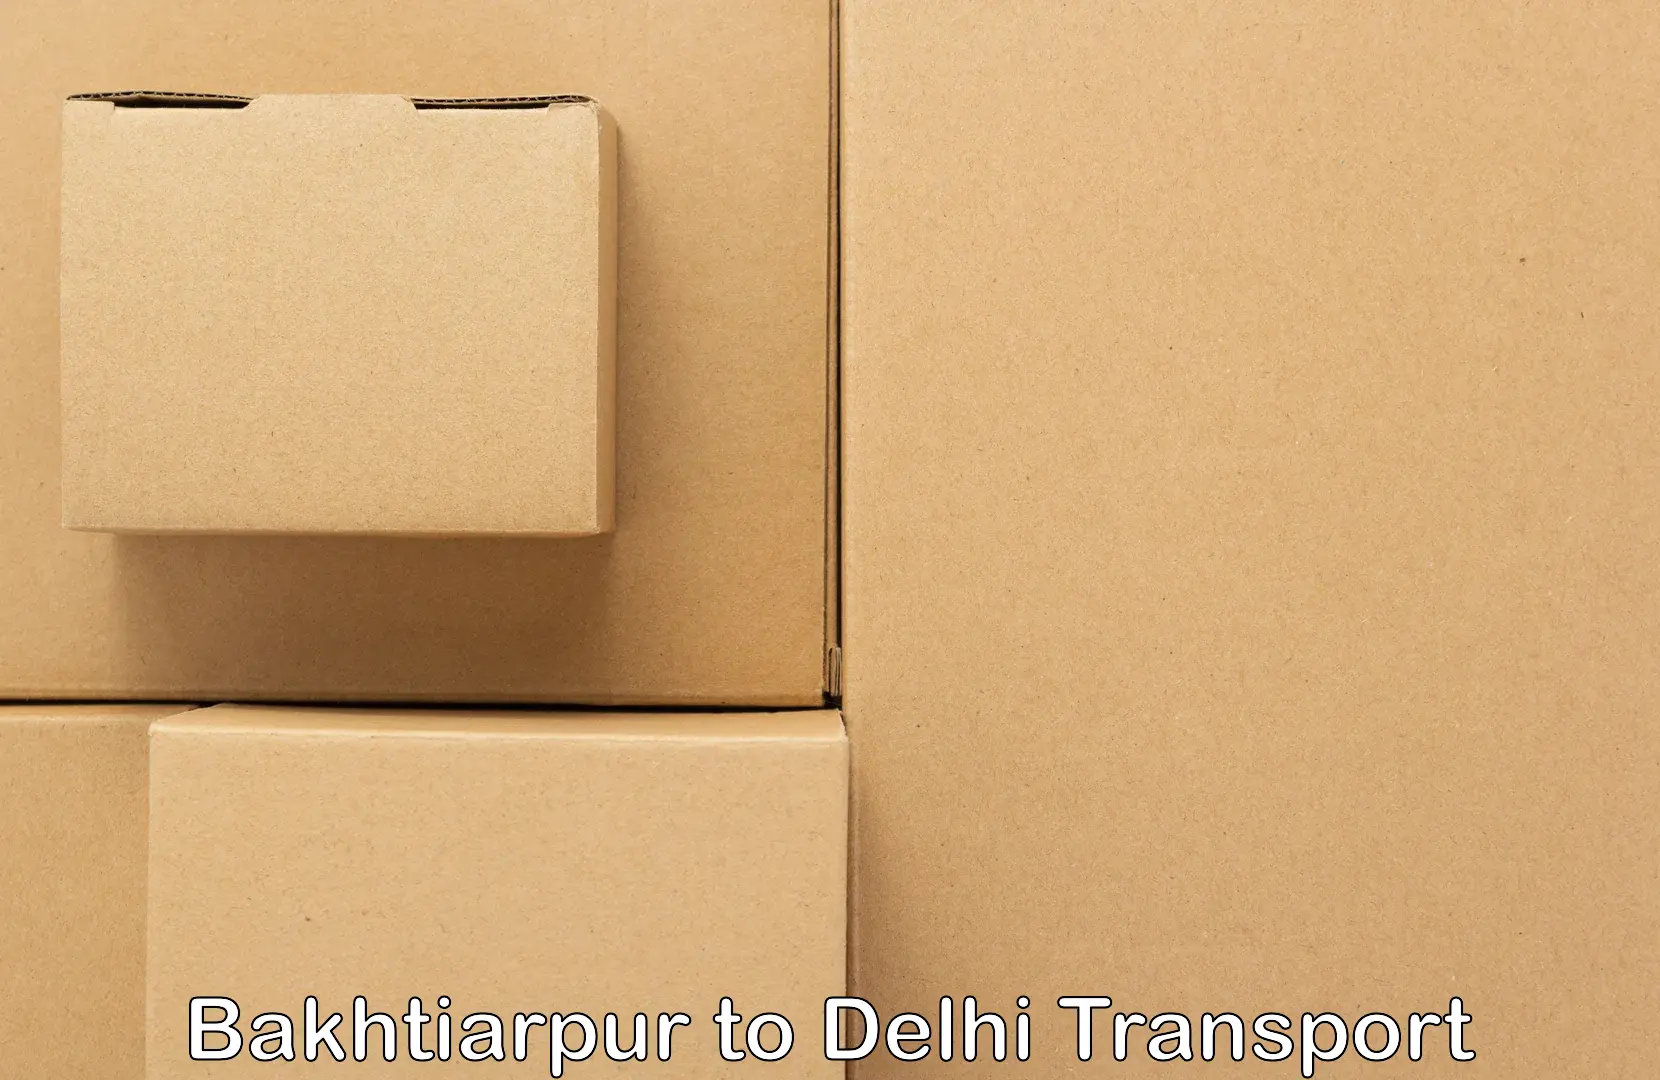 Shipping partner Bakhtiarpur to IIT Delhi